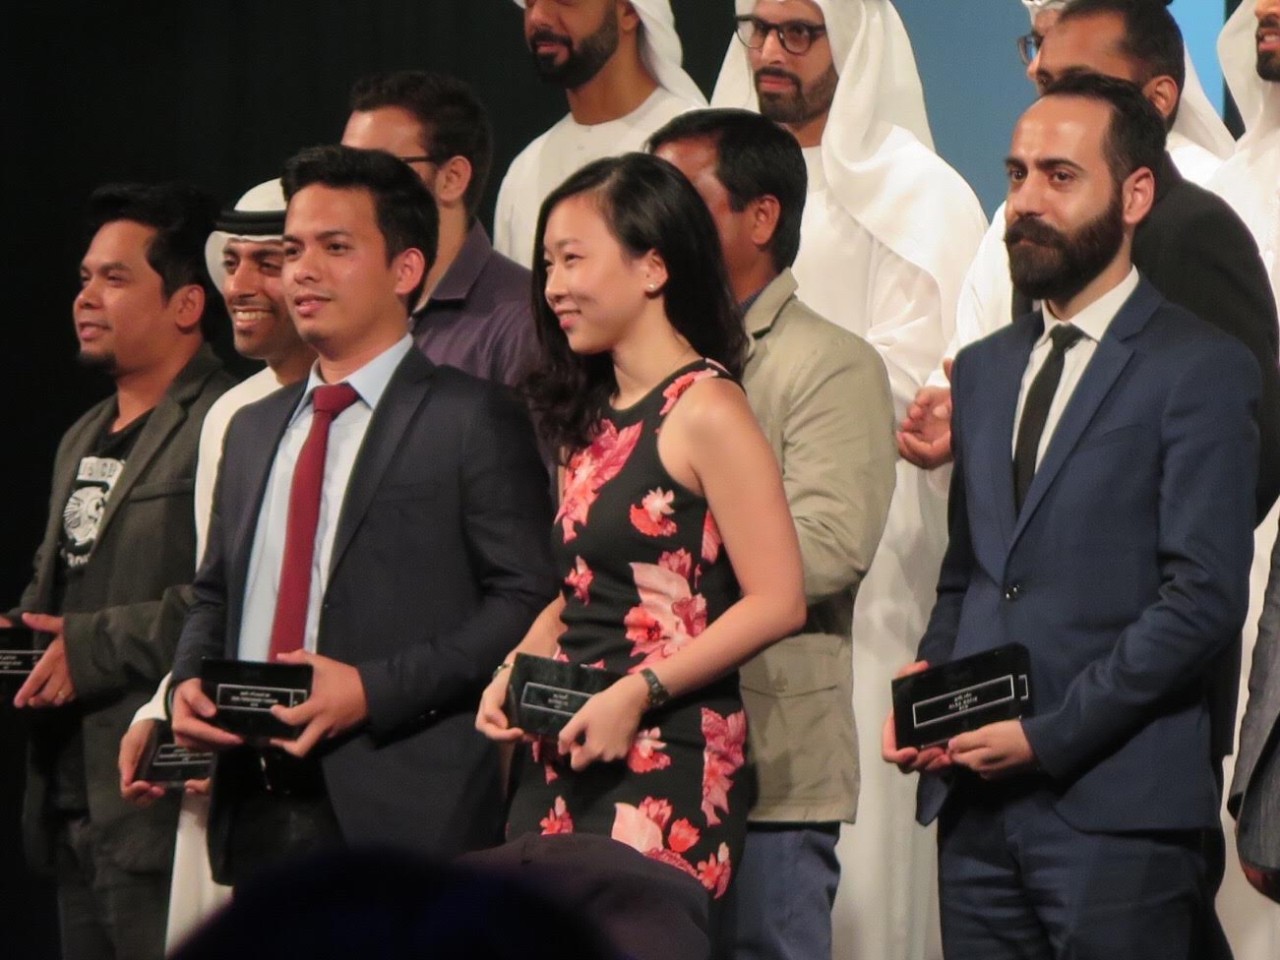 Prize-Winning Photo Captures Essence of Abu Dhabi